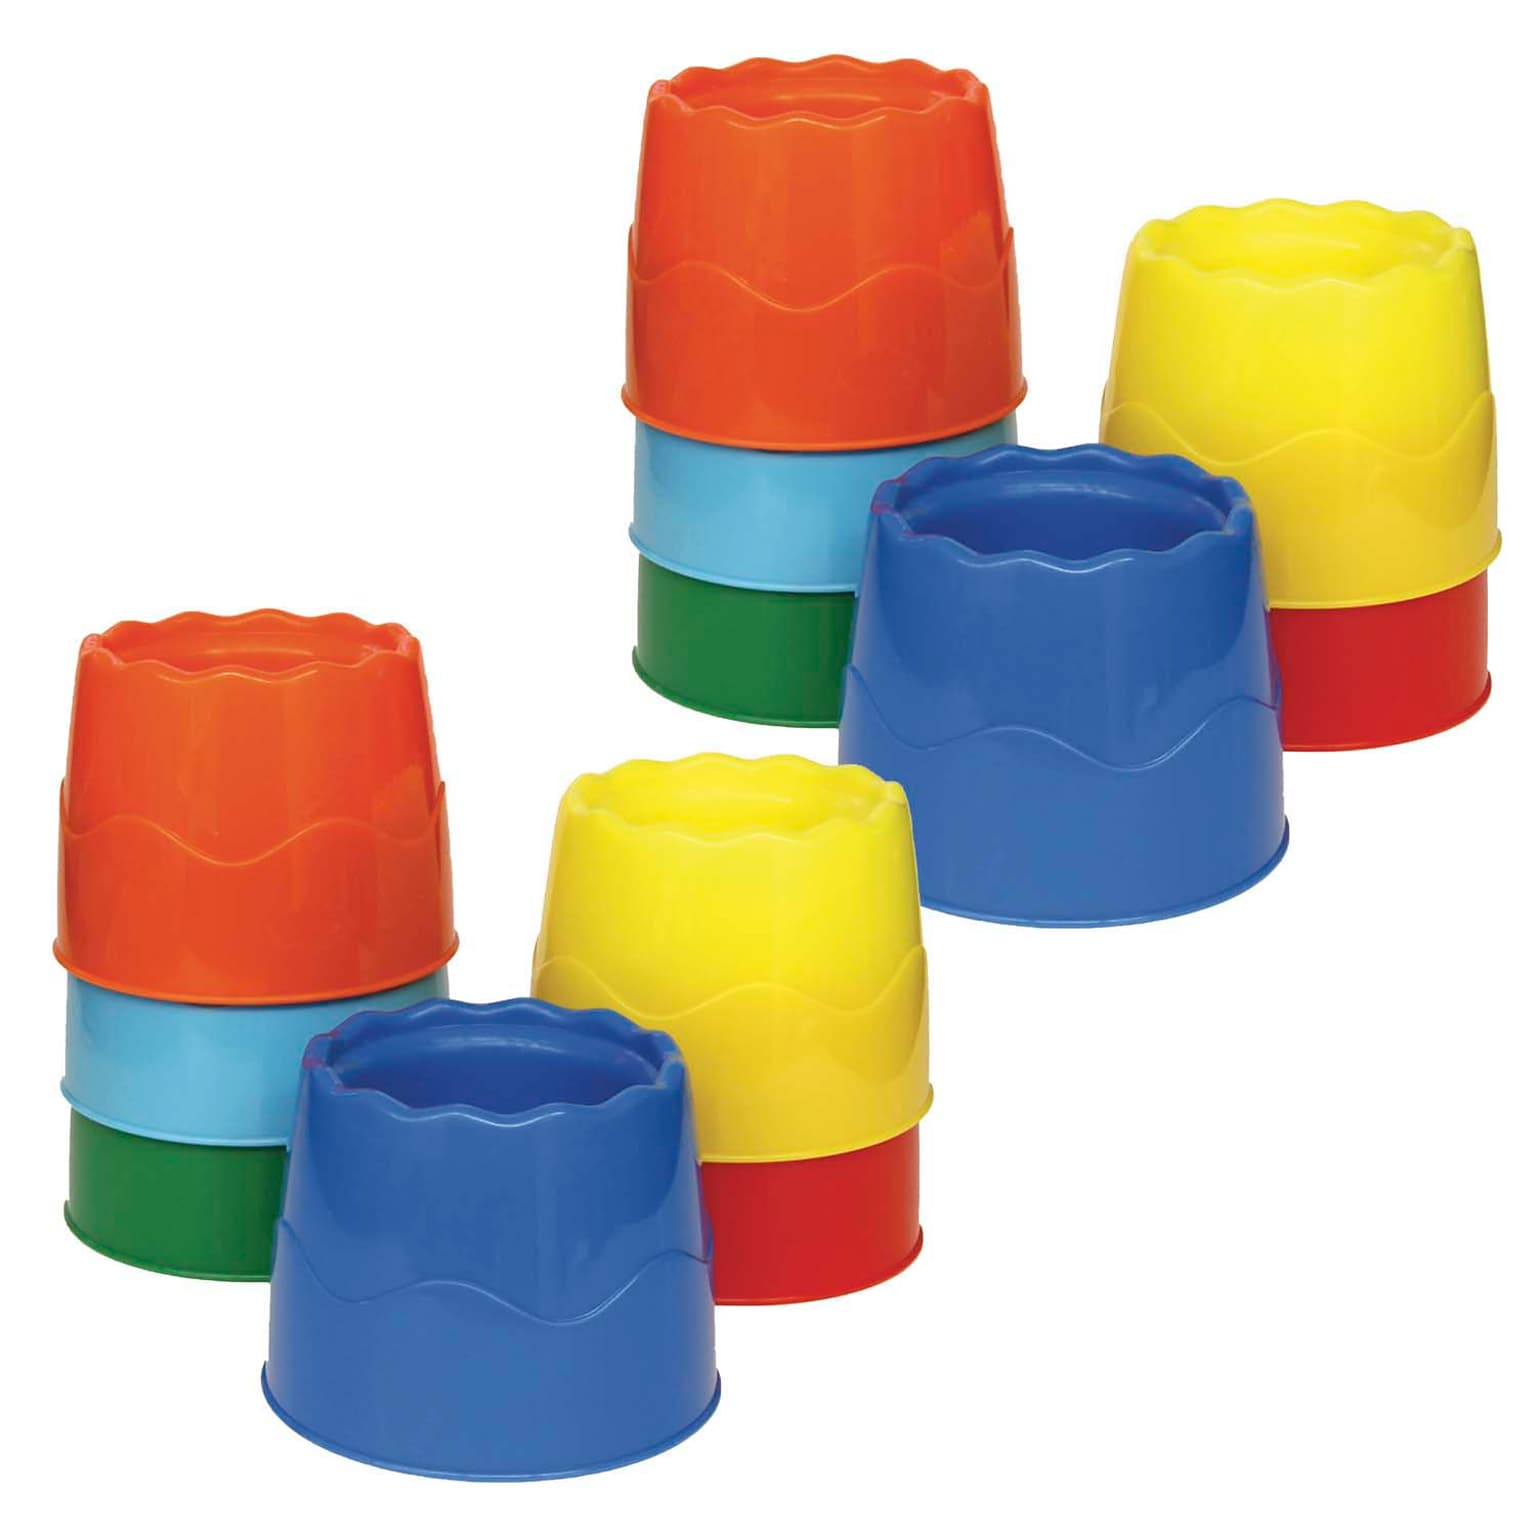 Creativity Street Stable Water Pots, Assorted Colors, 4.5 Diameter, 6 Per Pack, 2 Packs (CK-5122-2)